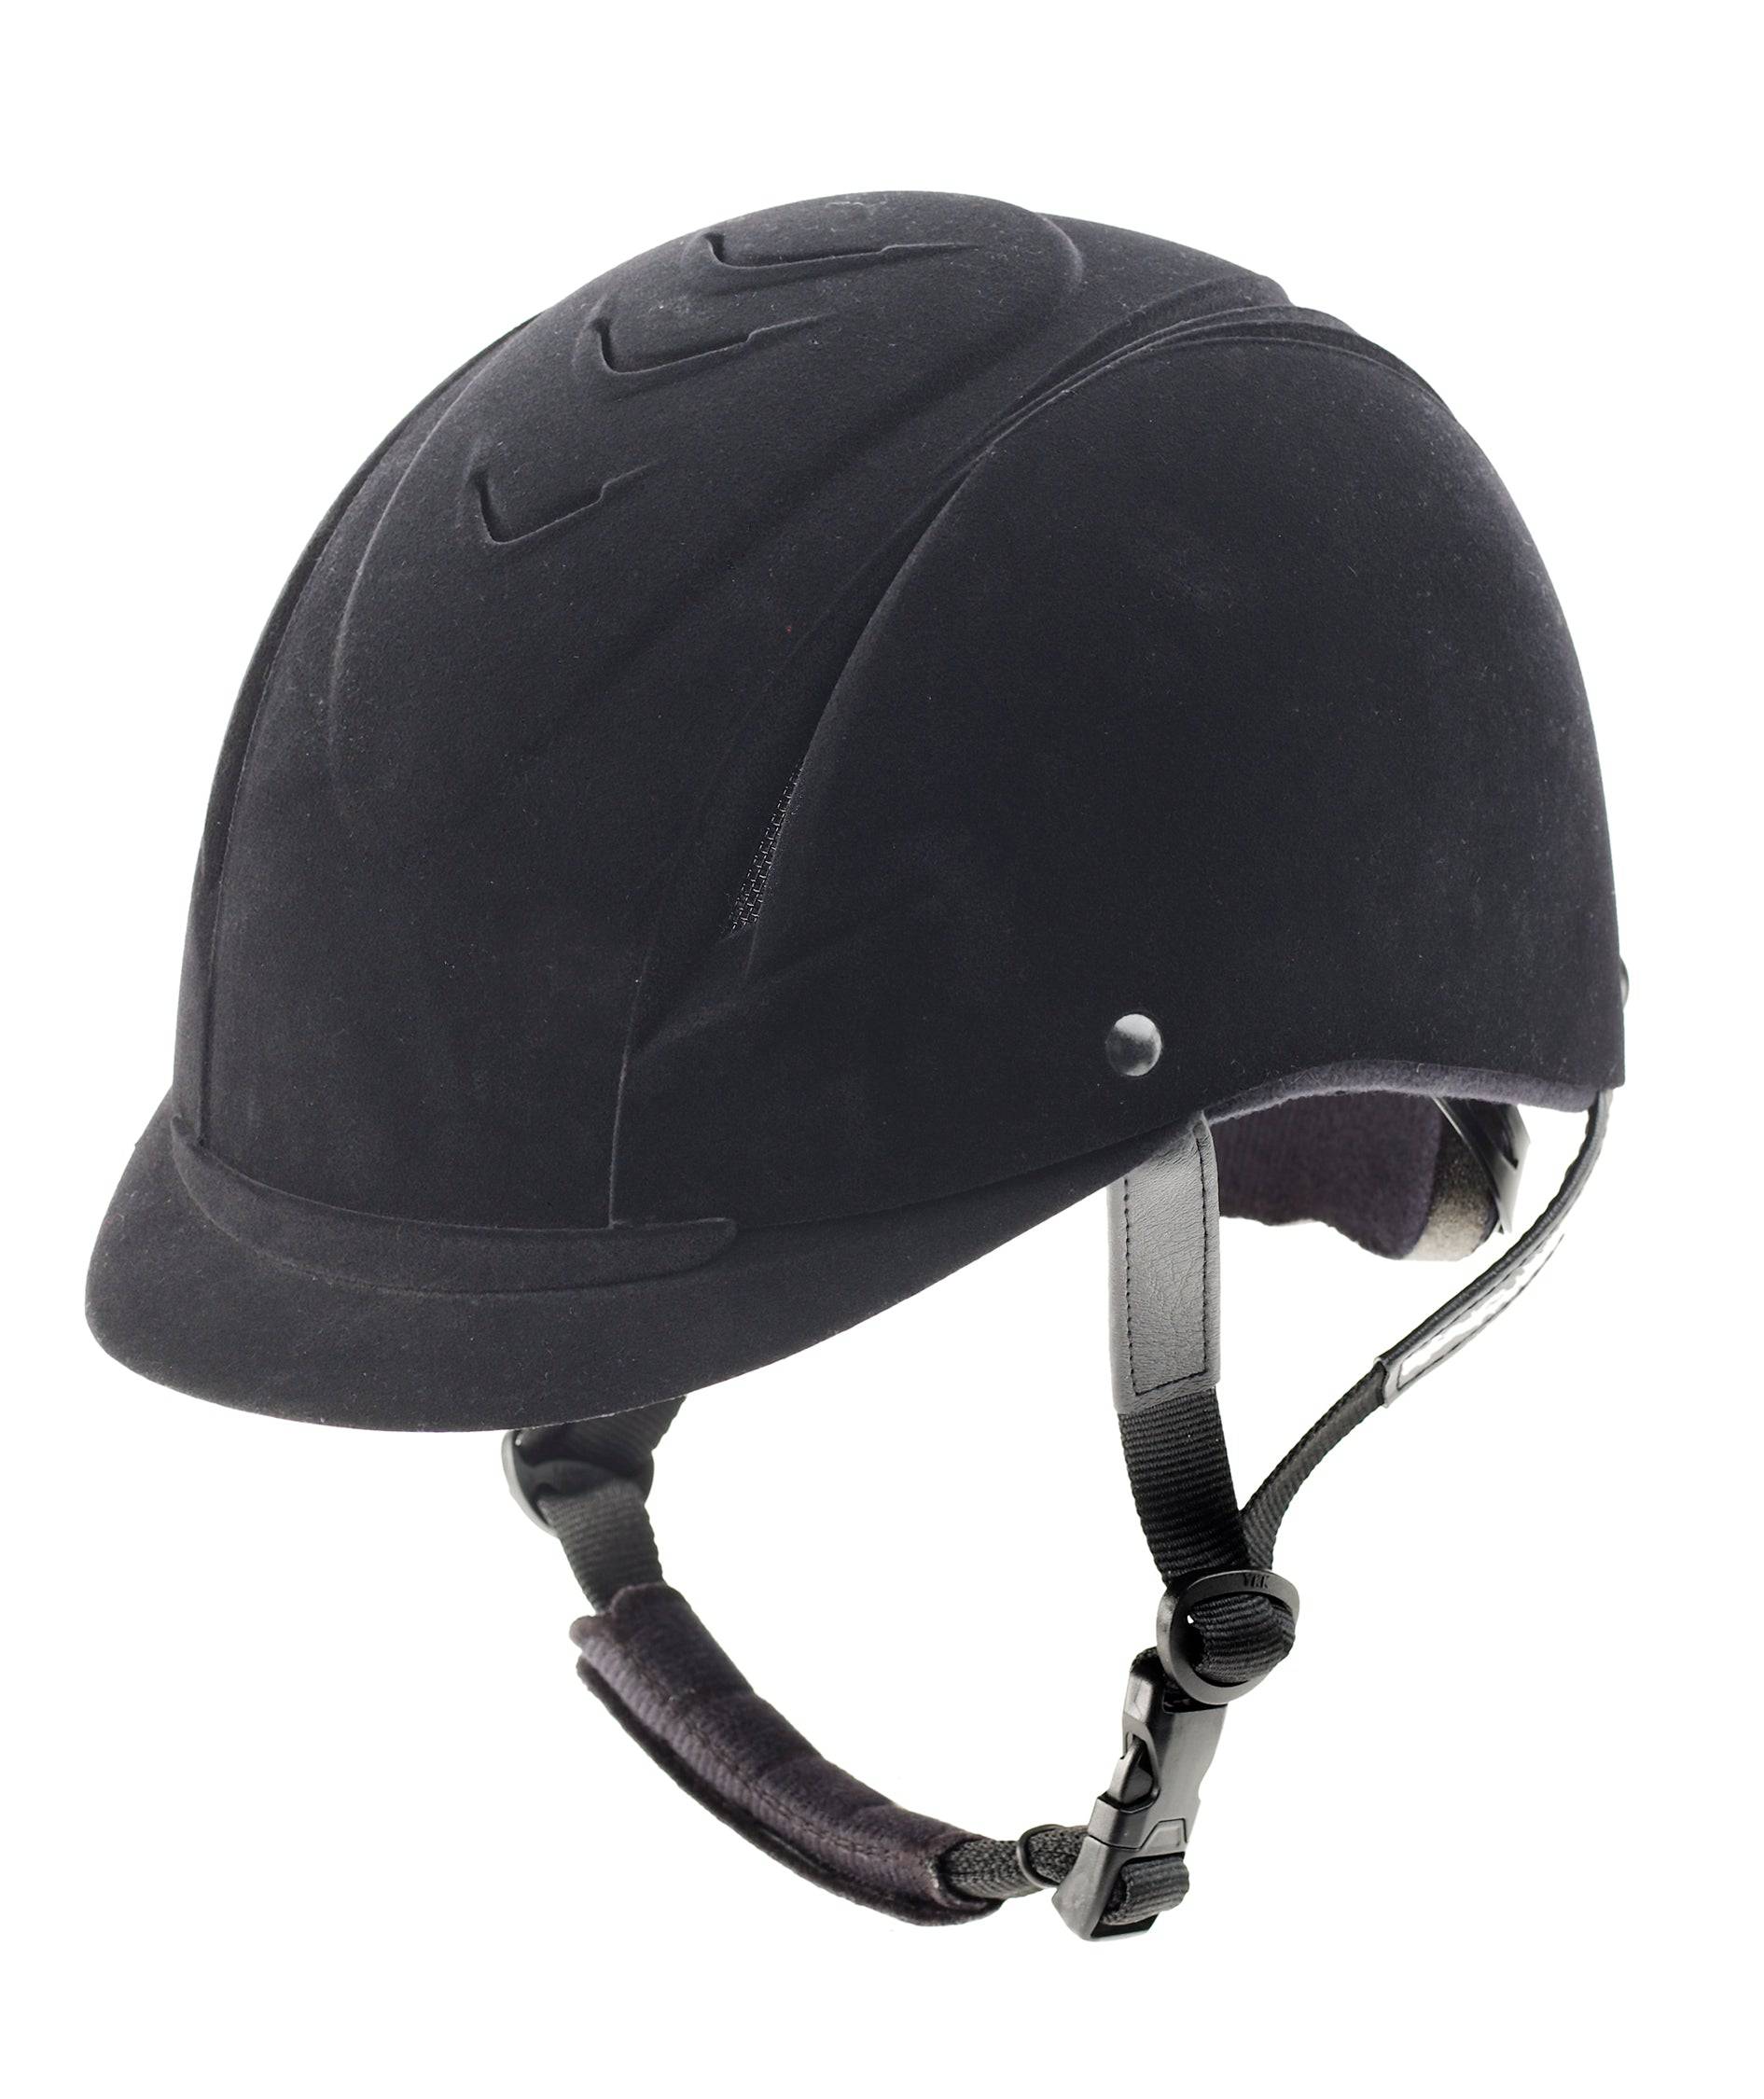 Ovation Competitor Helmet - Equine Exchange Tack Shop